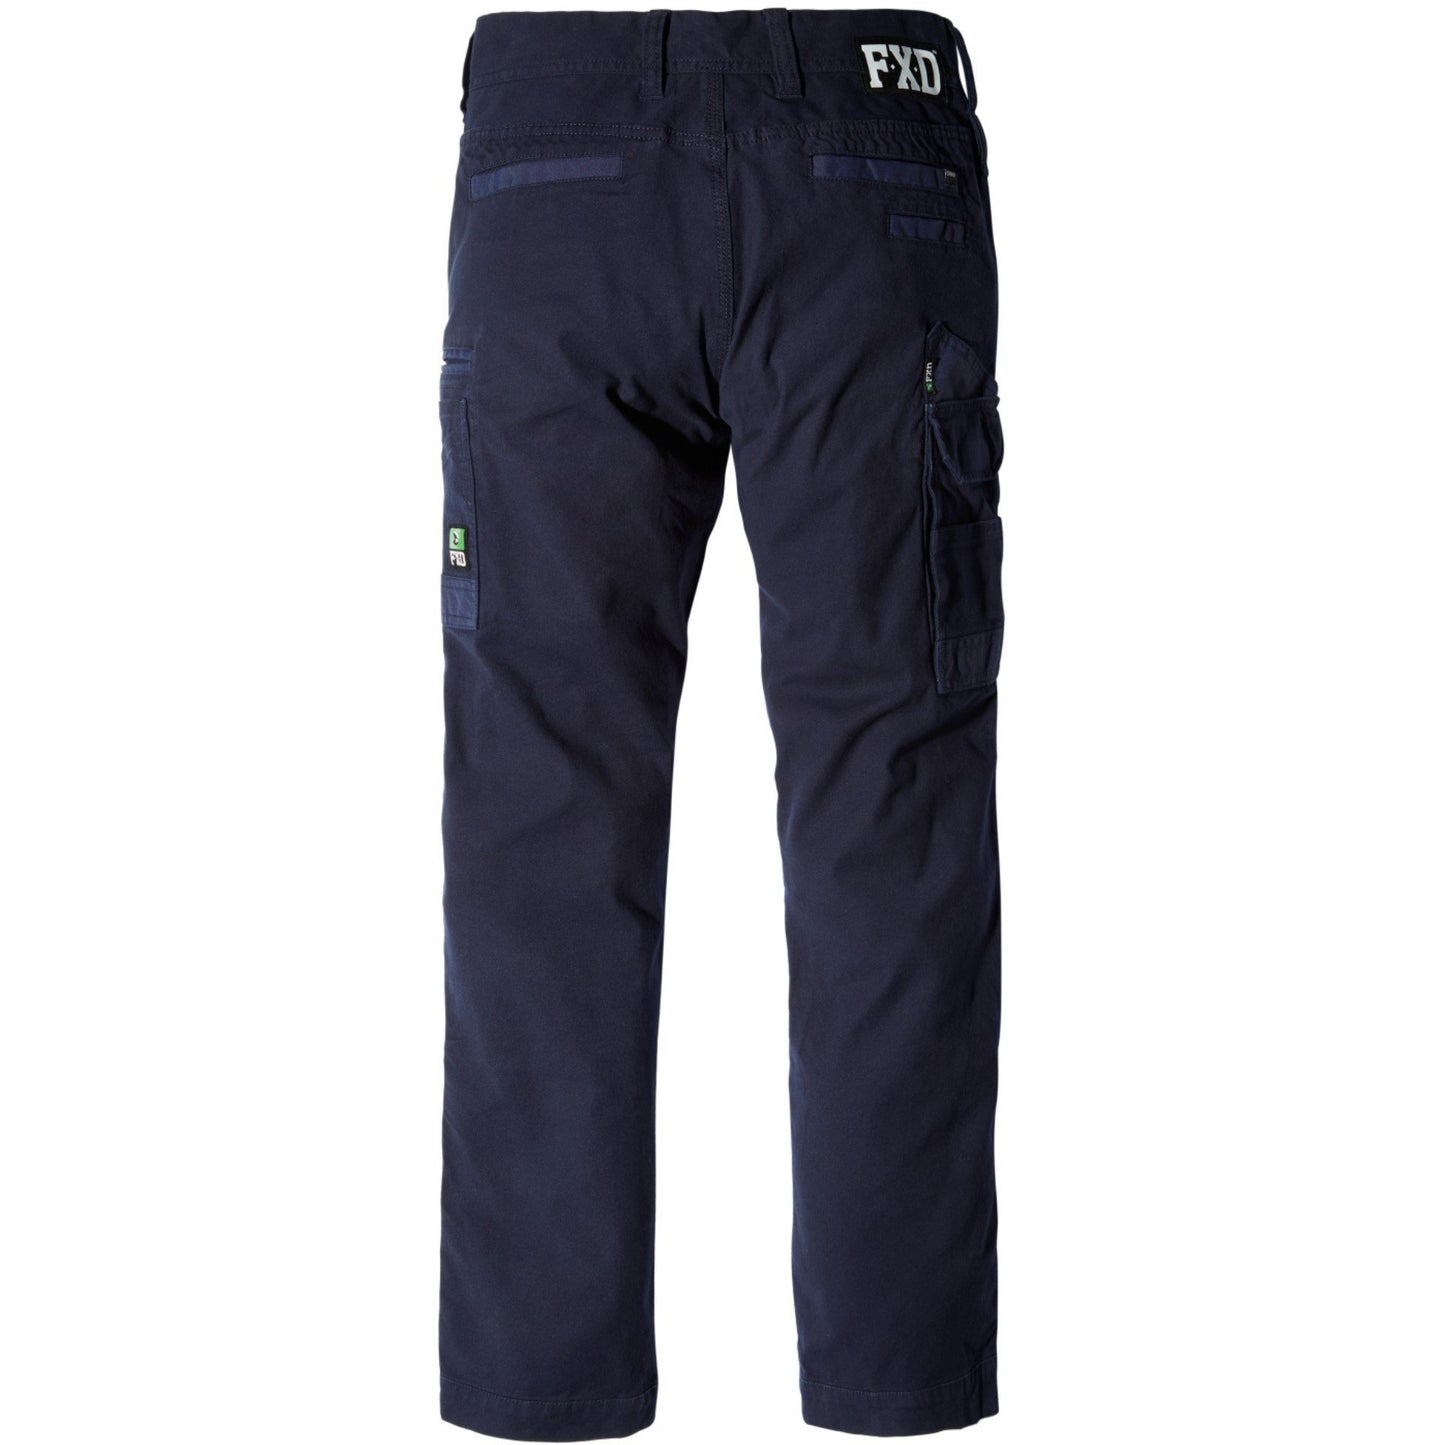 FXD WP3W Ladies Stretch Work Cargo Pants